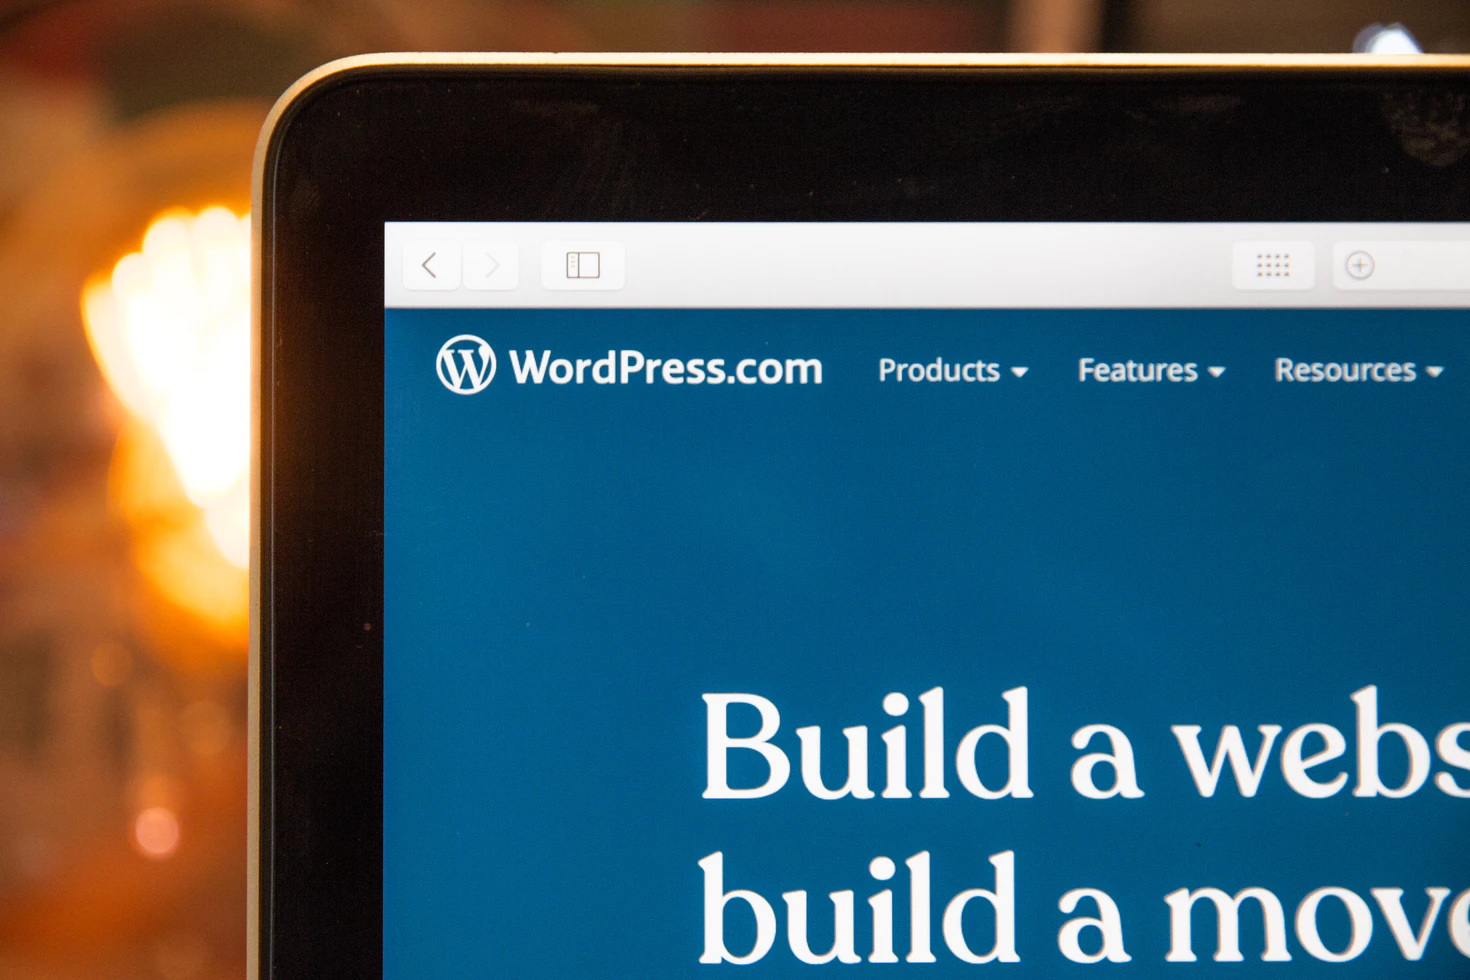 WordPress v Joomla – which is better?